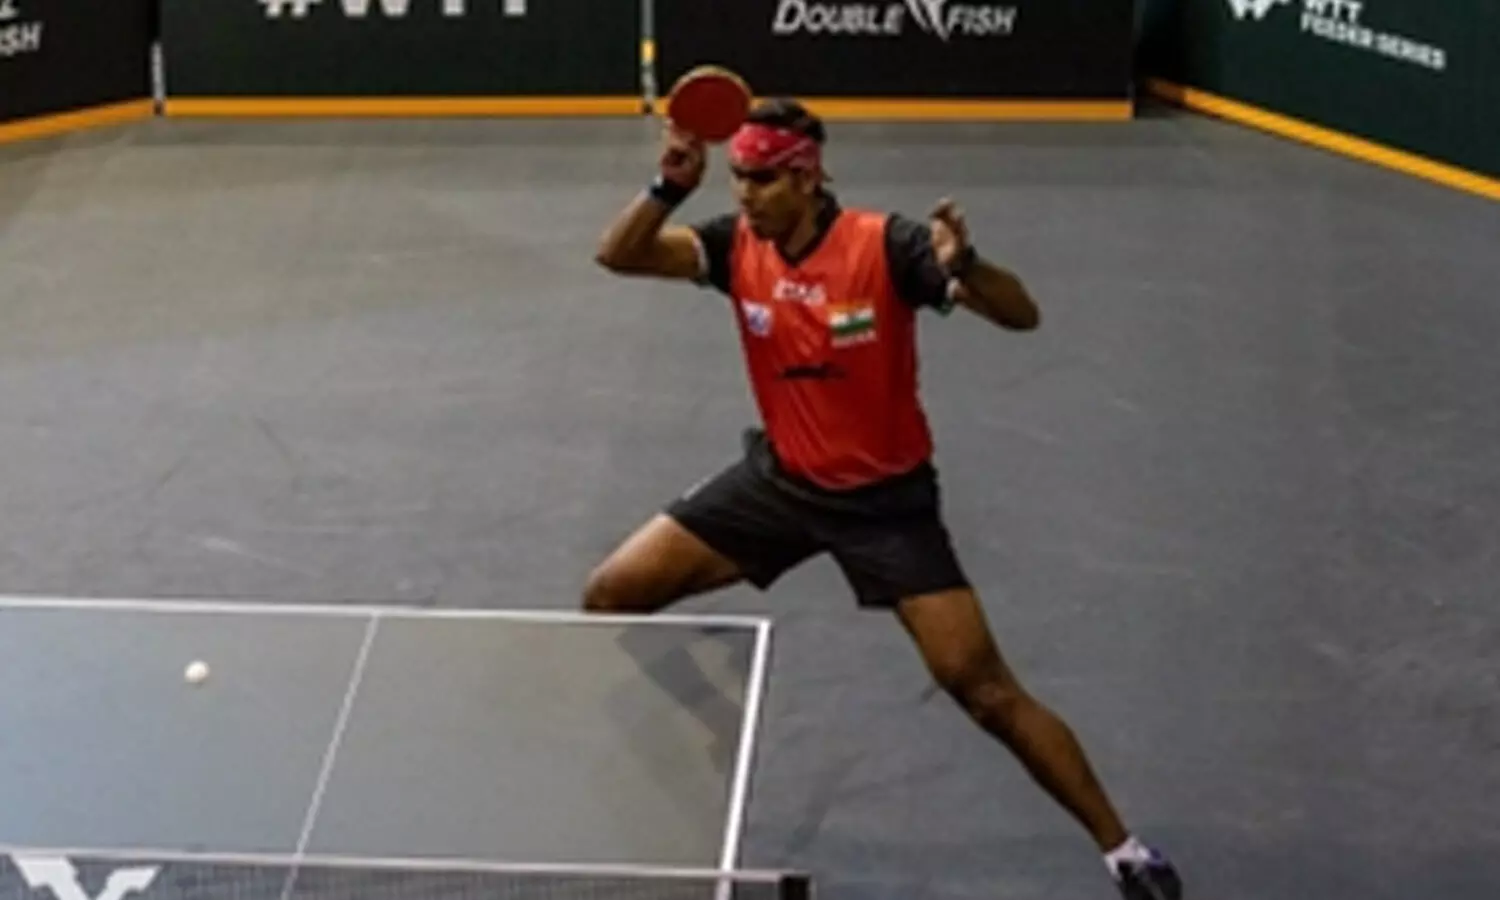 Singapore Smash TT: Sharath Kamal loses to World No. 6 in quarterfinals